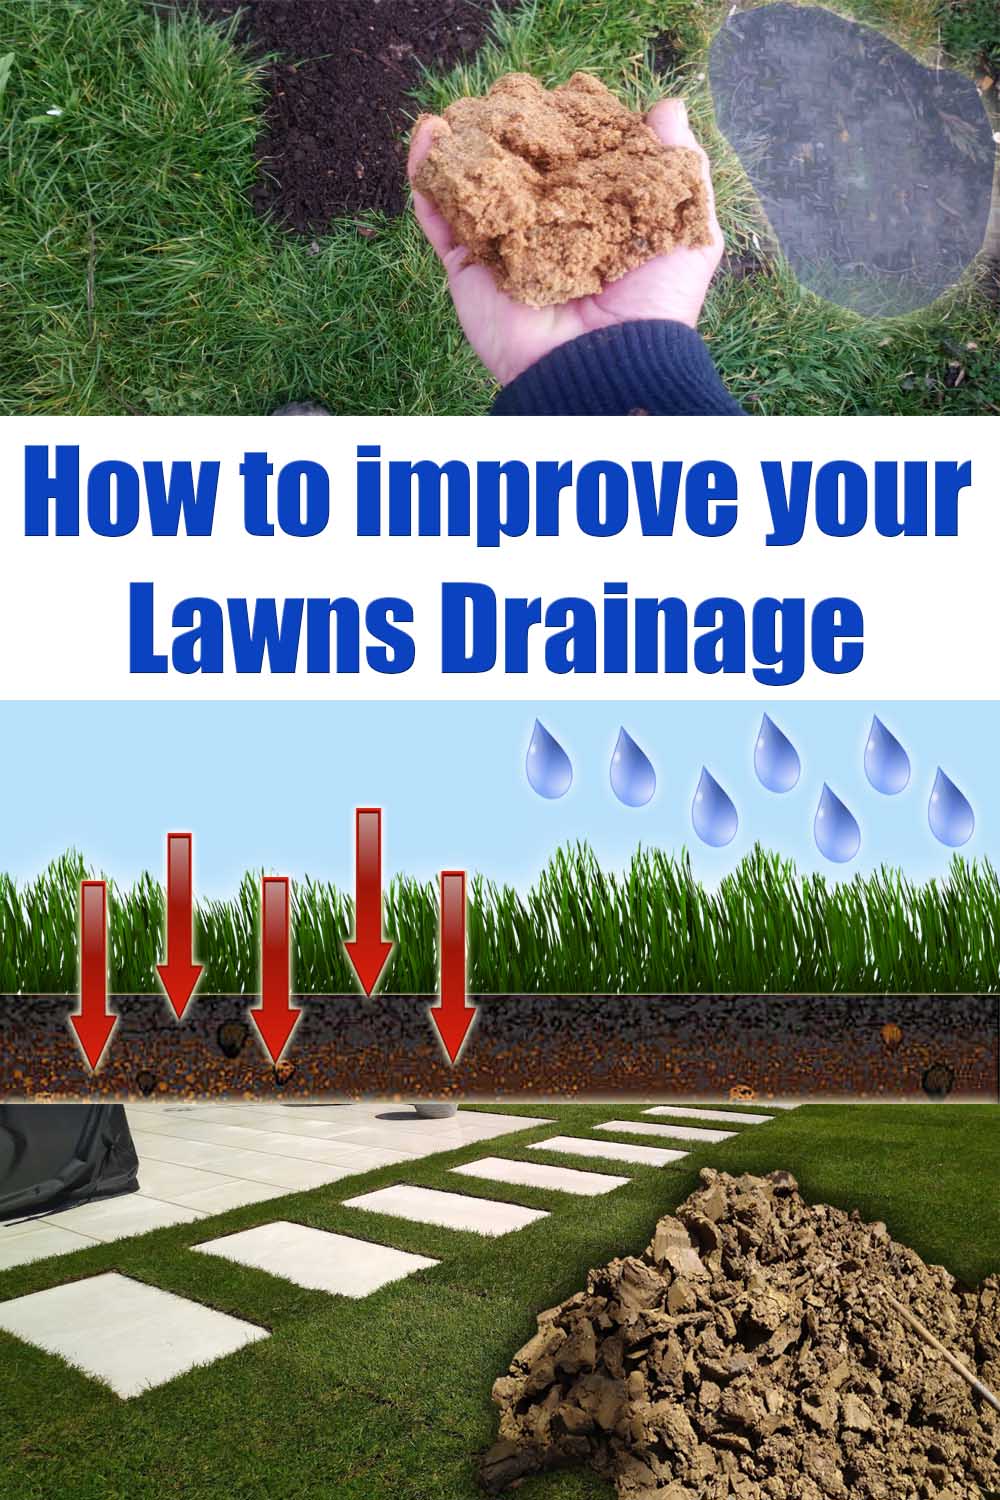 Lawn drainage